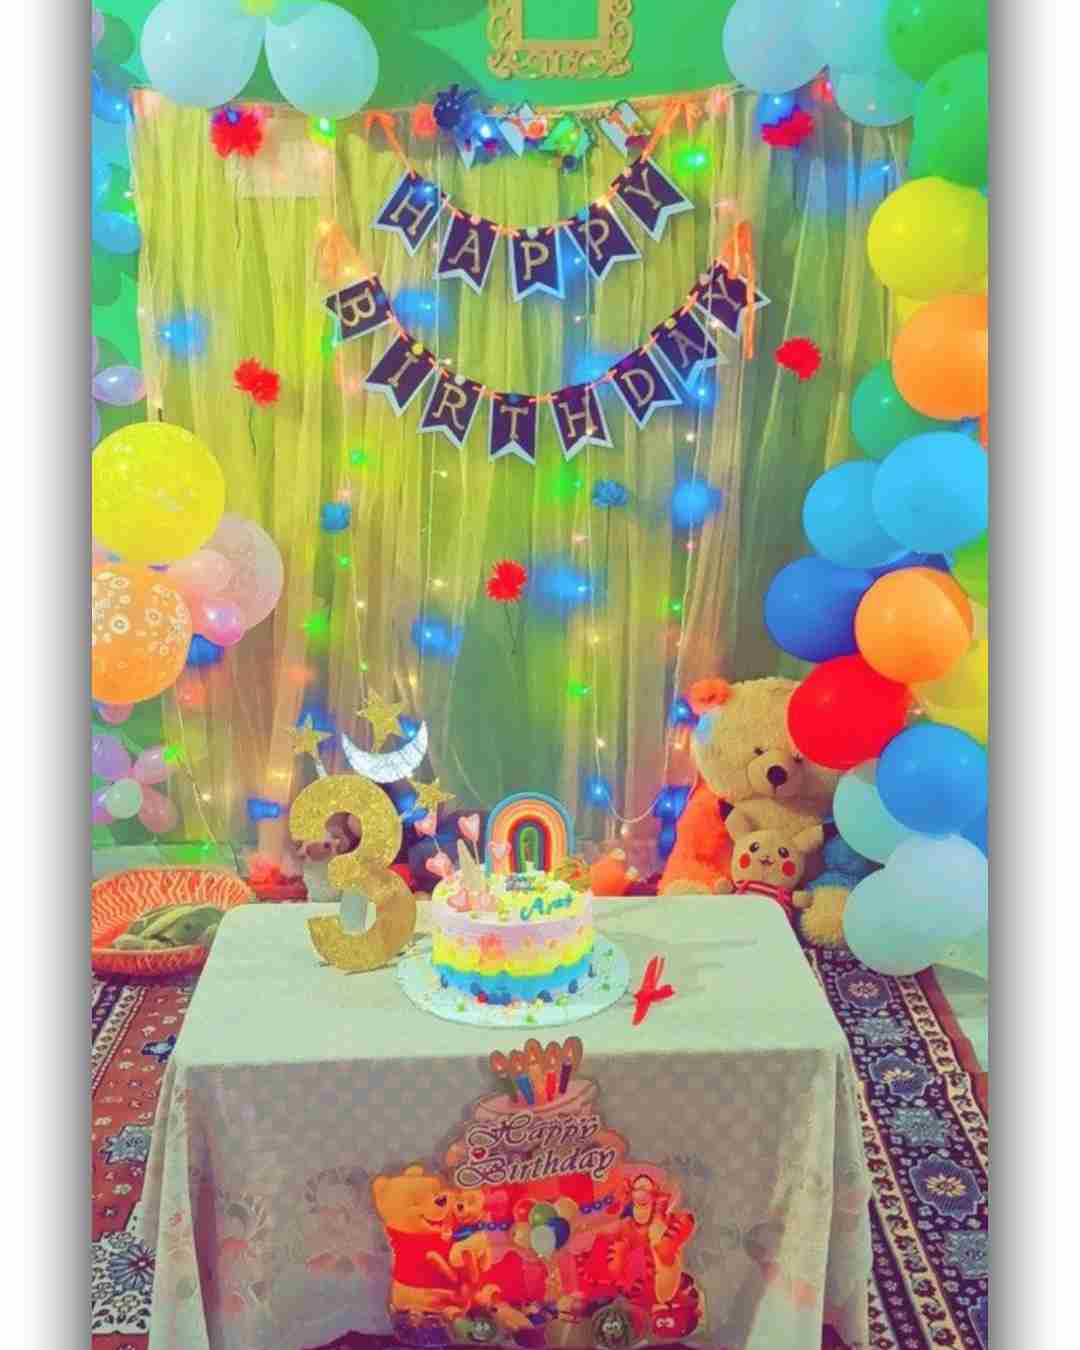 Happy Birthday photo editing background for baby